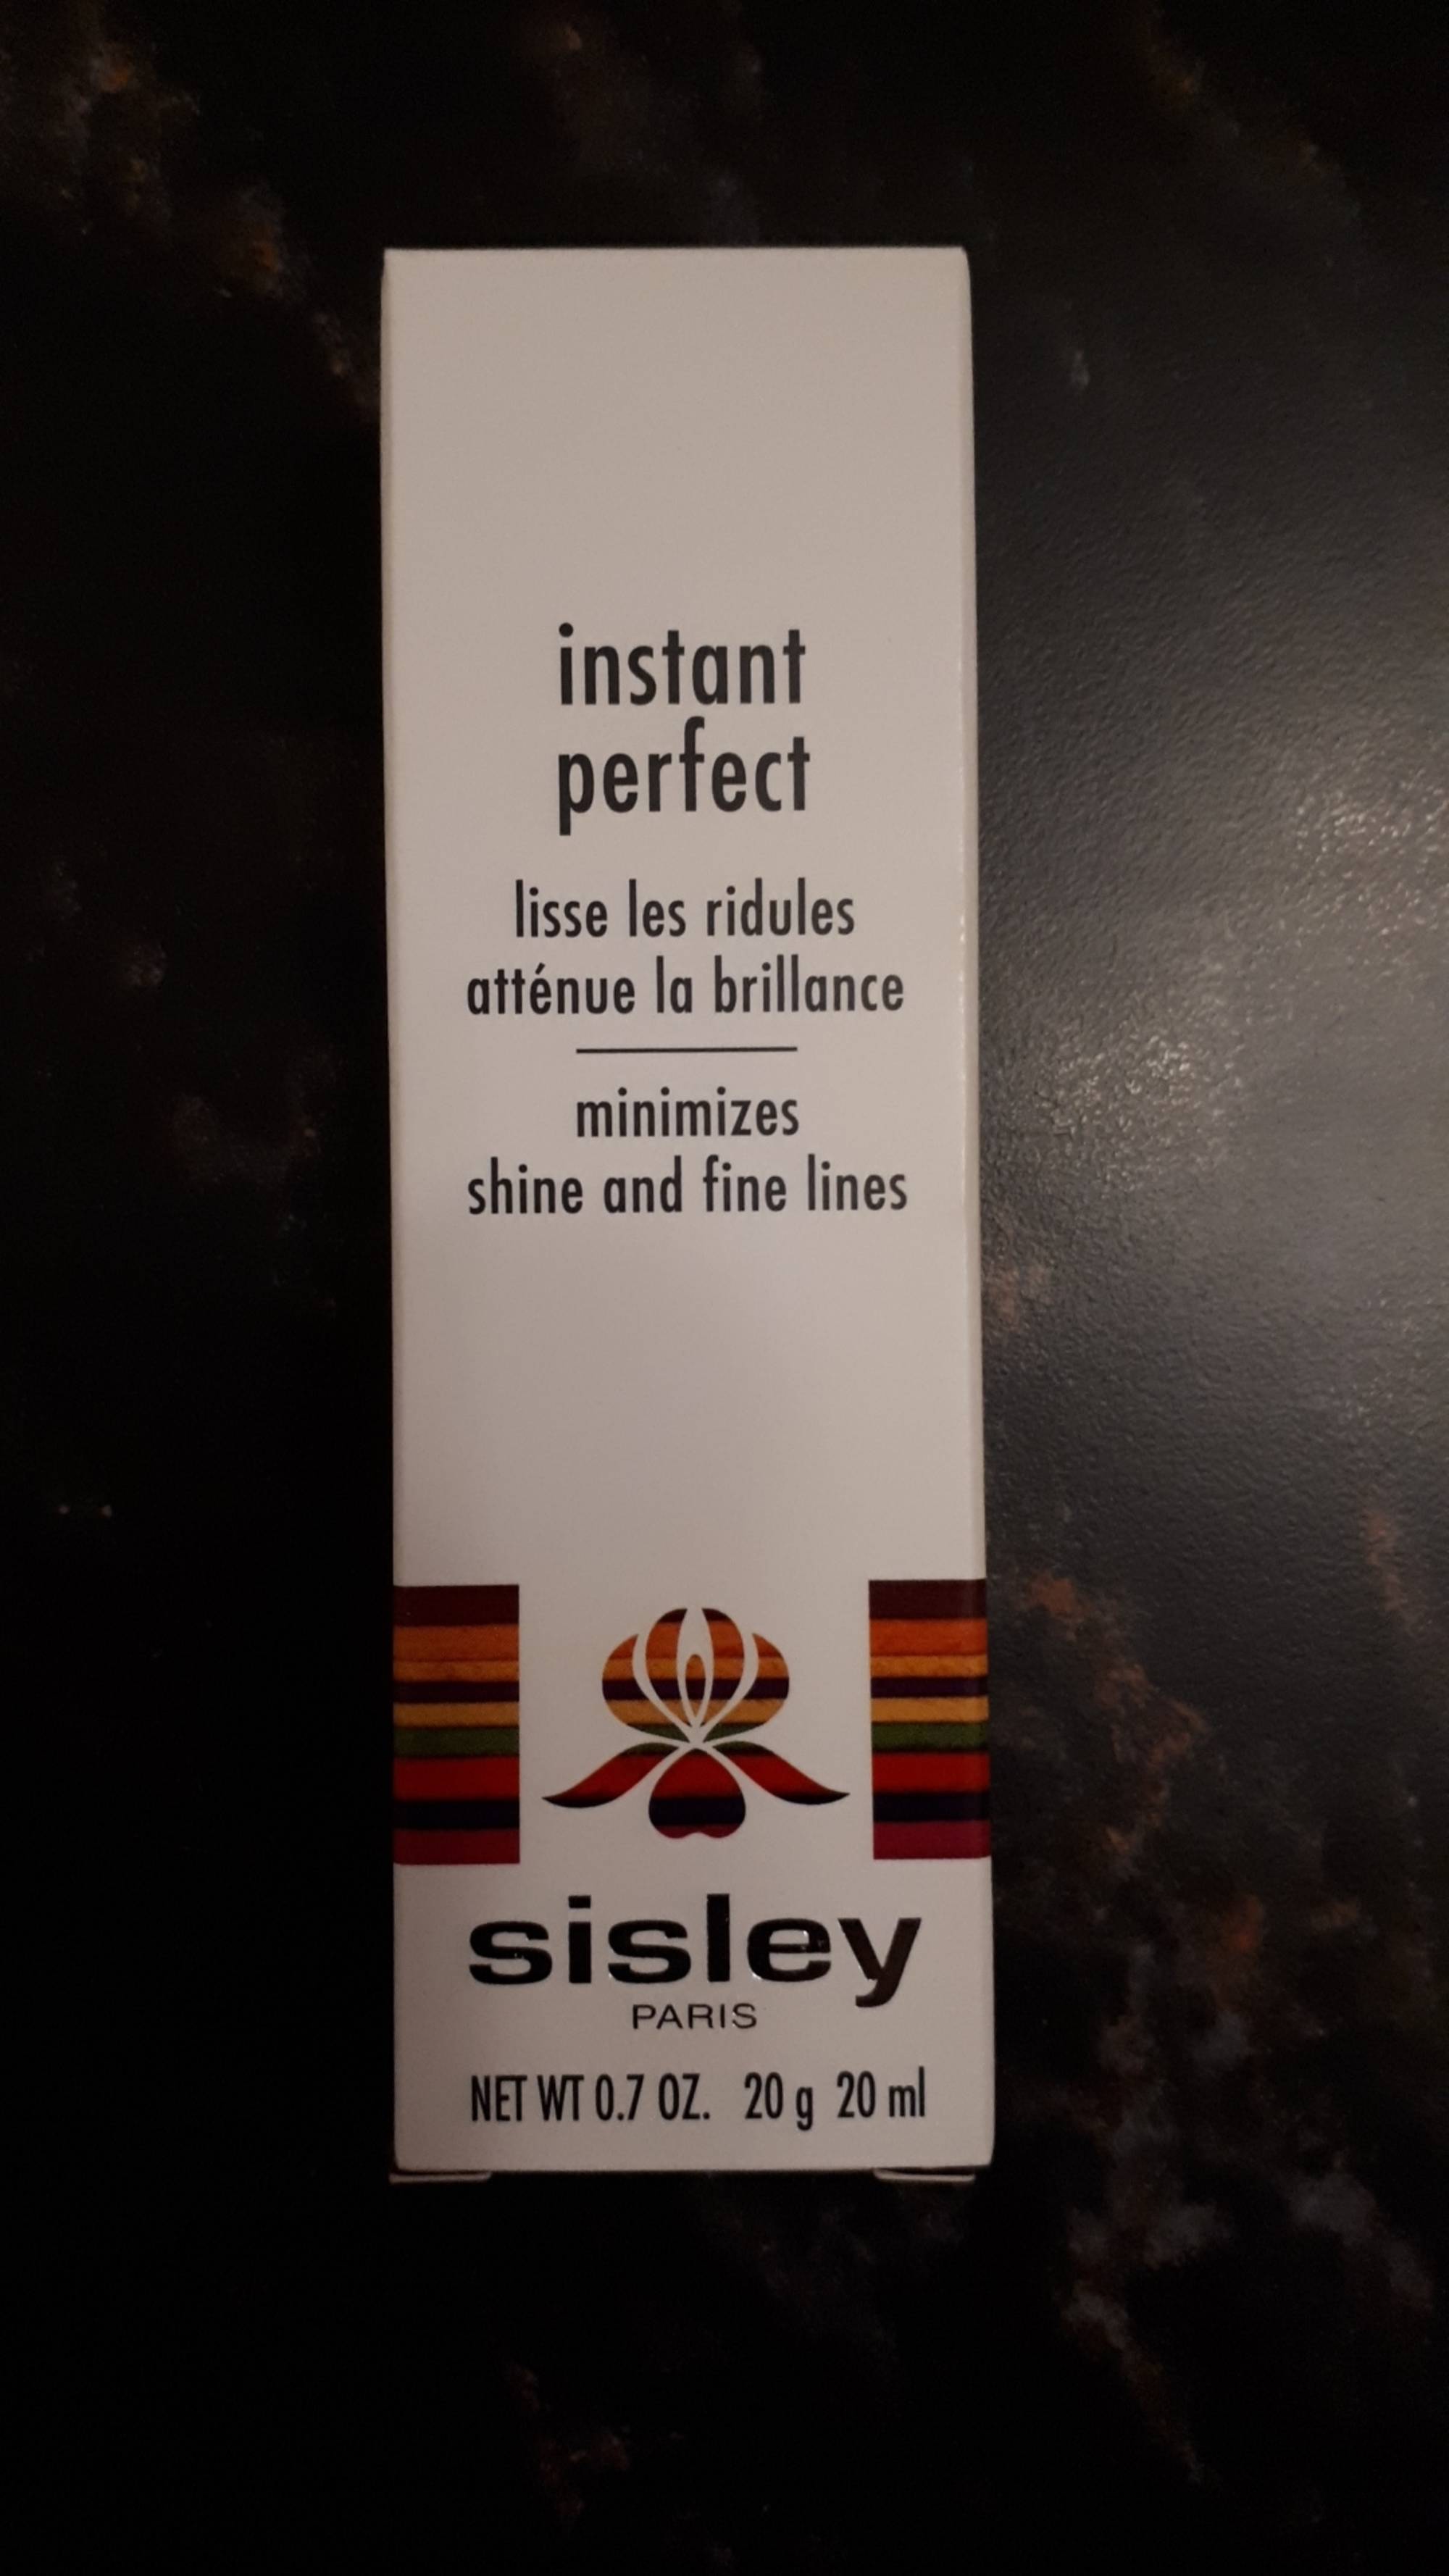 SISLEY - Instant perfect - Lisse les ridules atténue la brillance